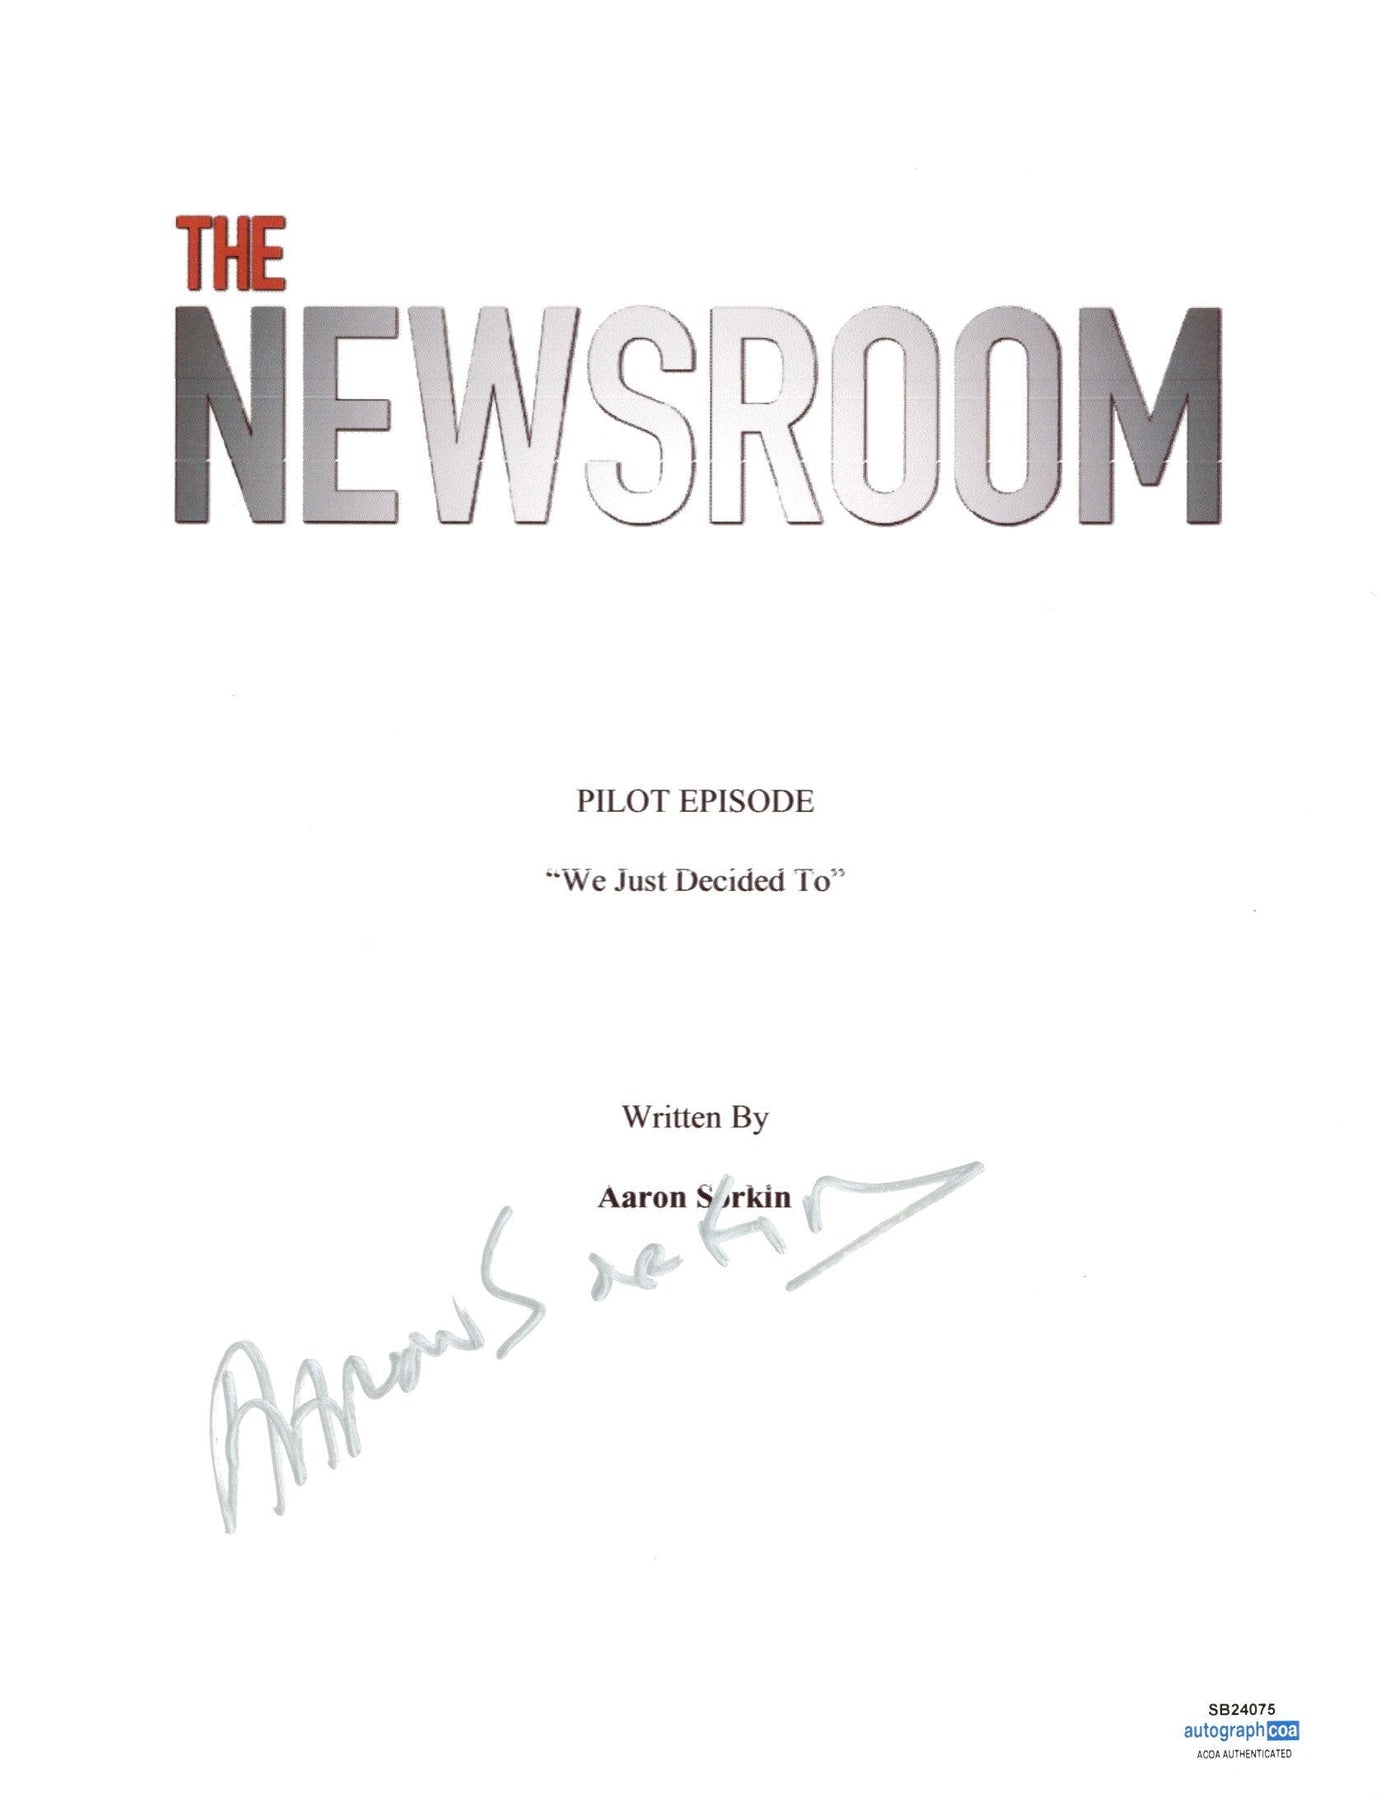 Aaron Sorkin Signed The Newsroom Script Cover Autographed ACOA